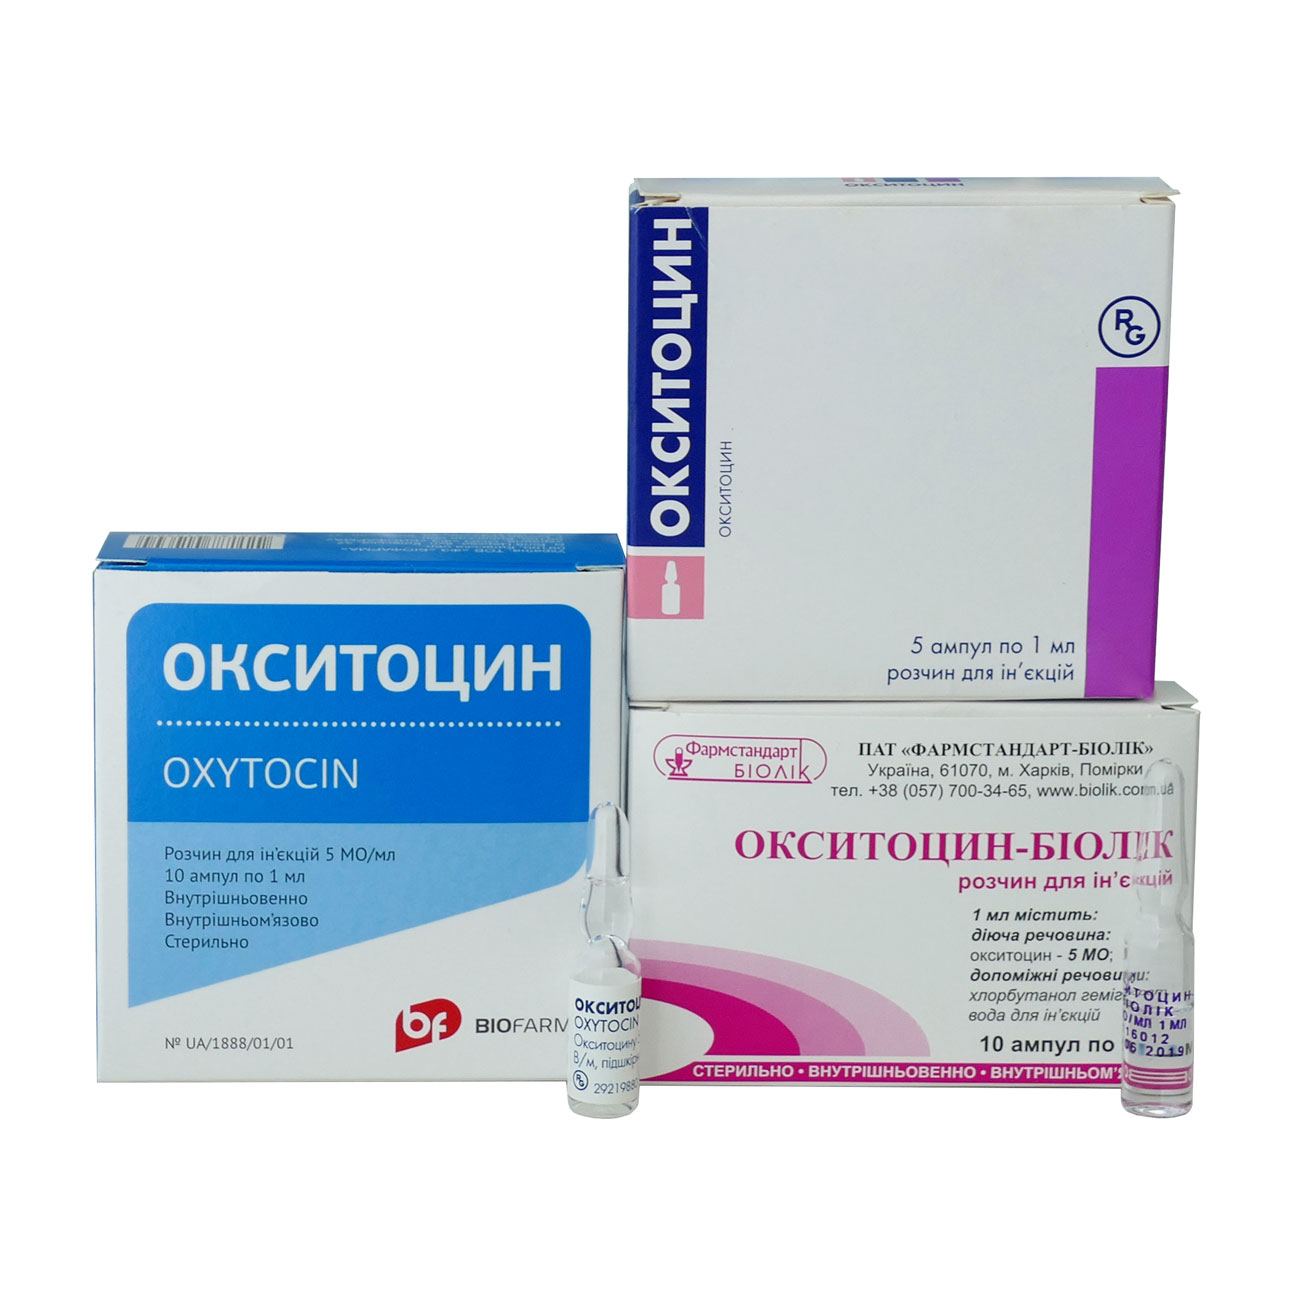 Окситоцин: инструкция по применению препарата и его цена